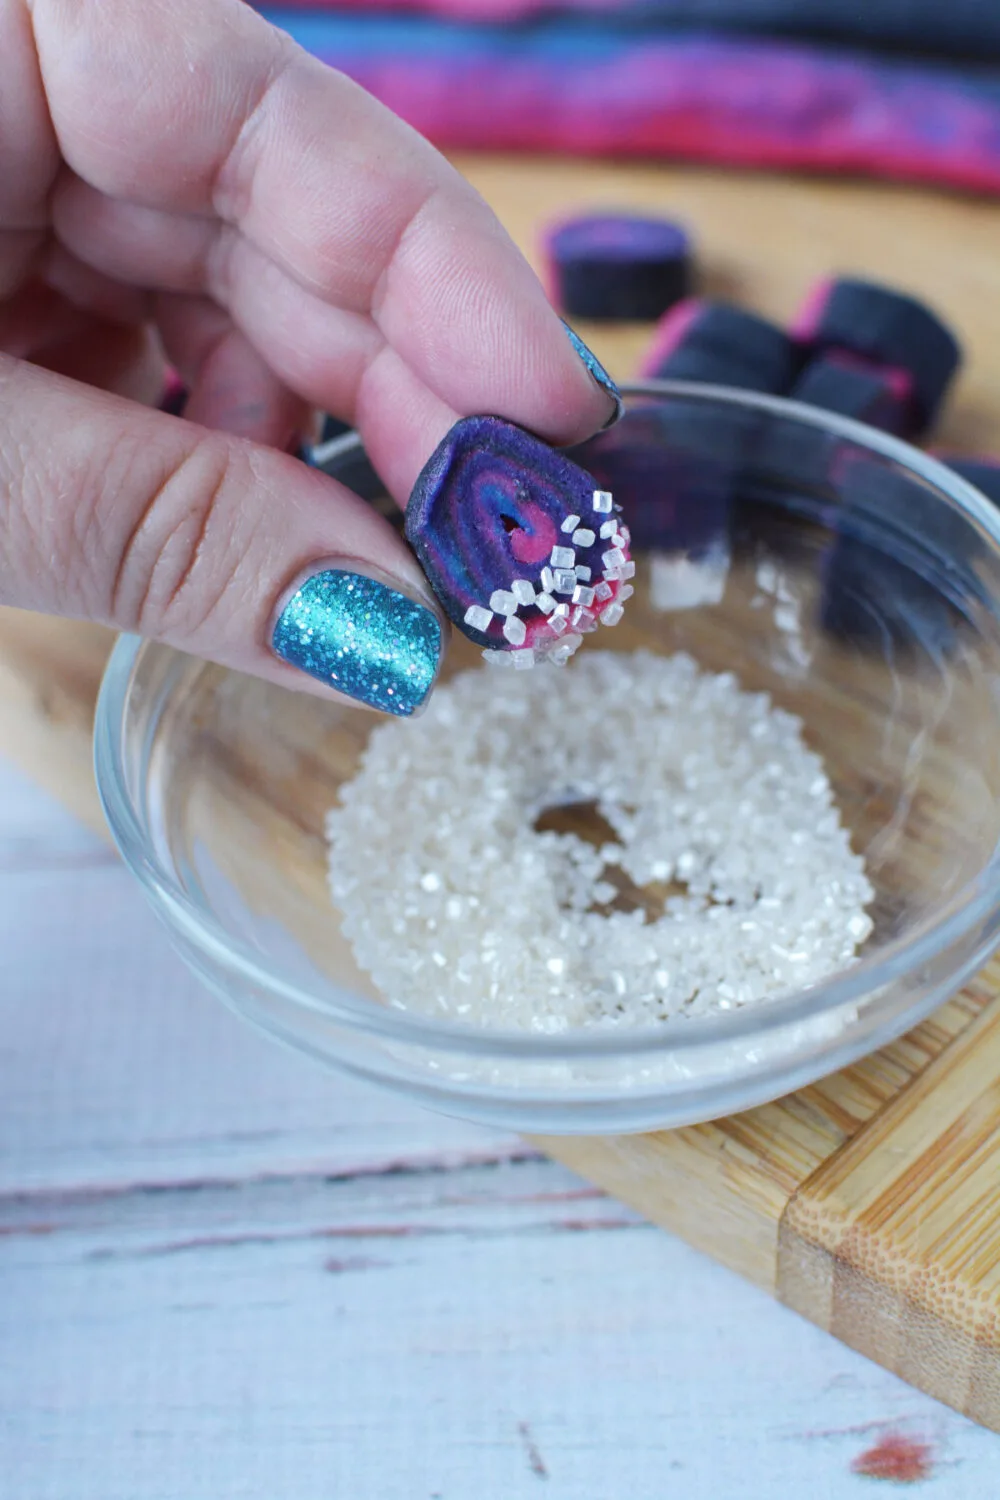 Dipping mini cookie into sugar sprinkles. 